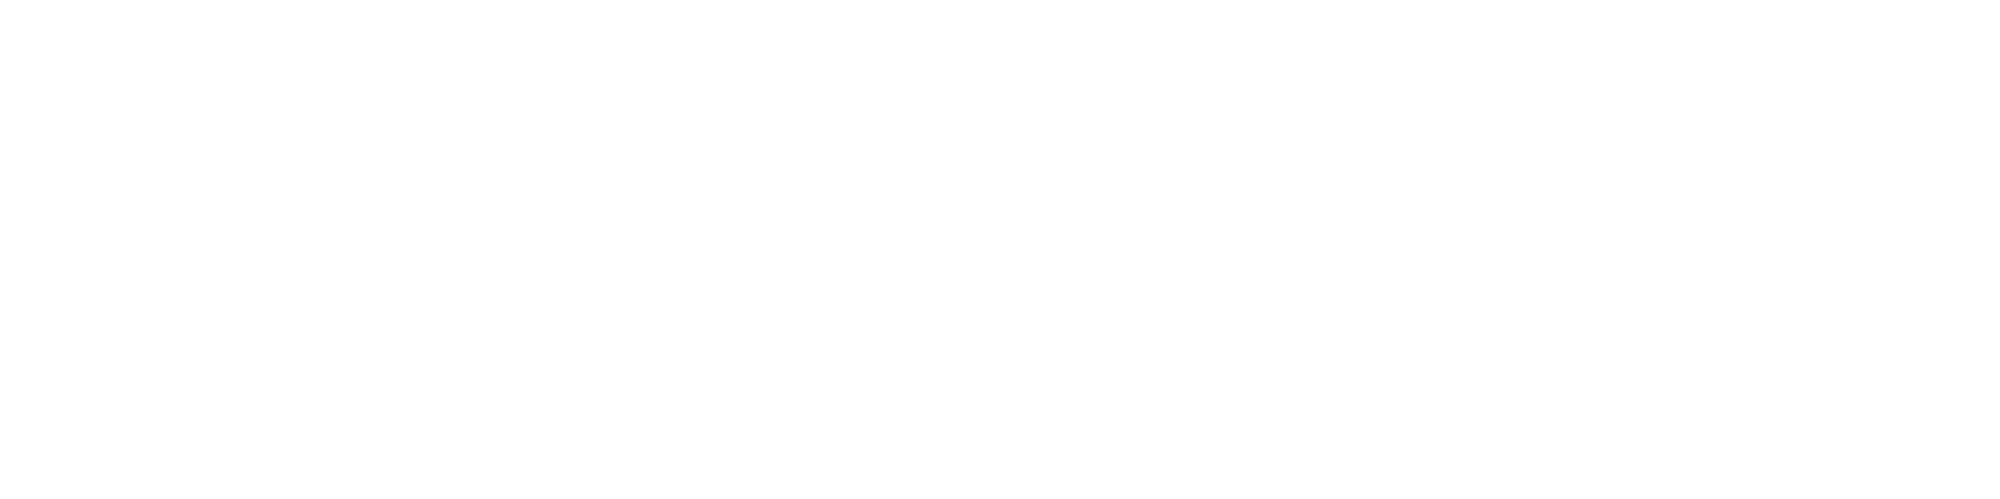 Captions Worlds